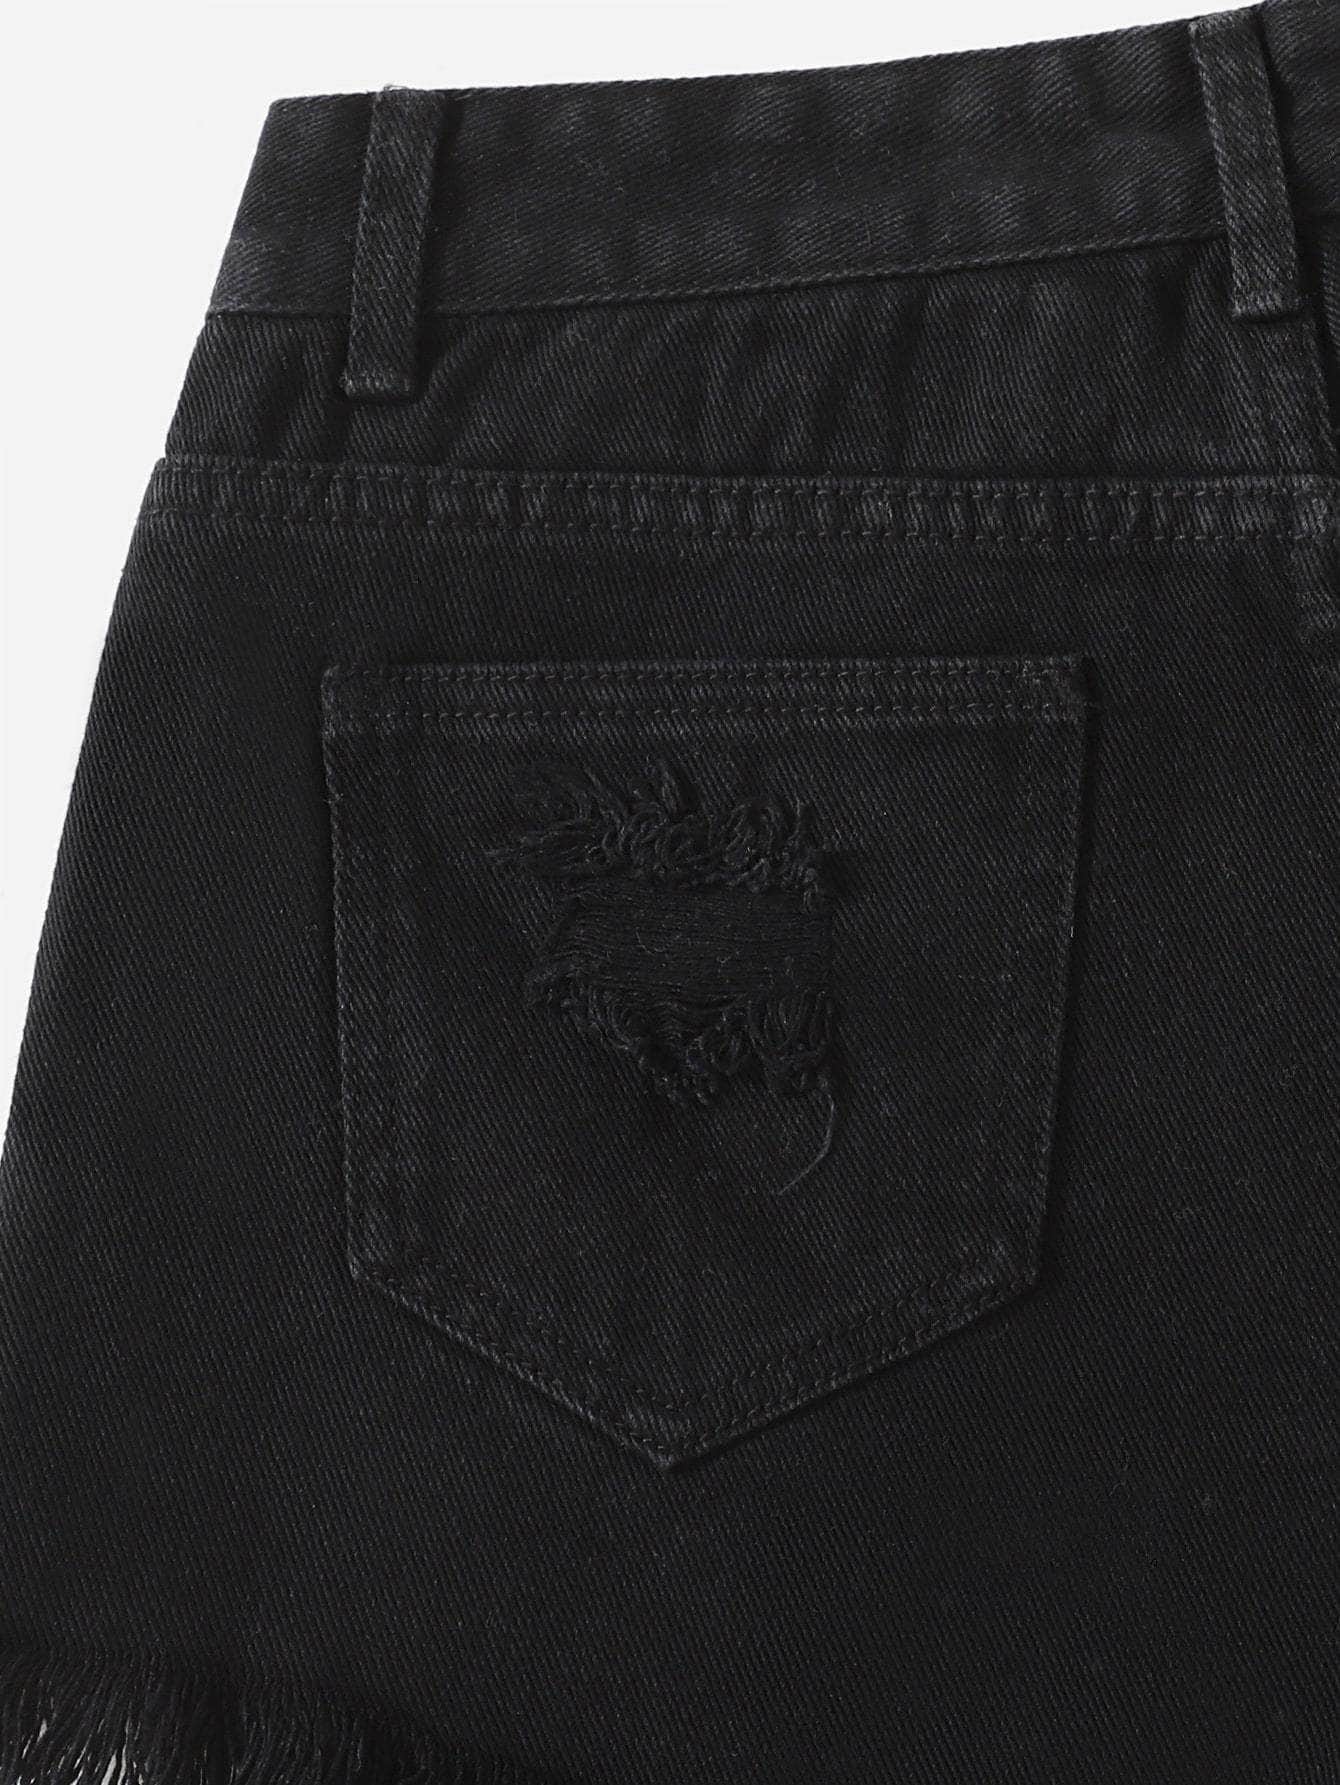 Negro / XL Shorts jean rotos bajo crudo